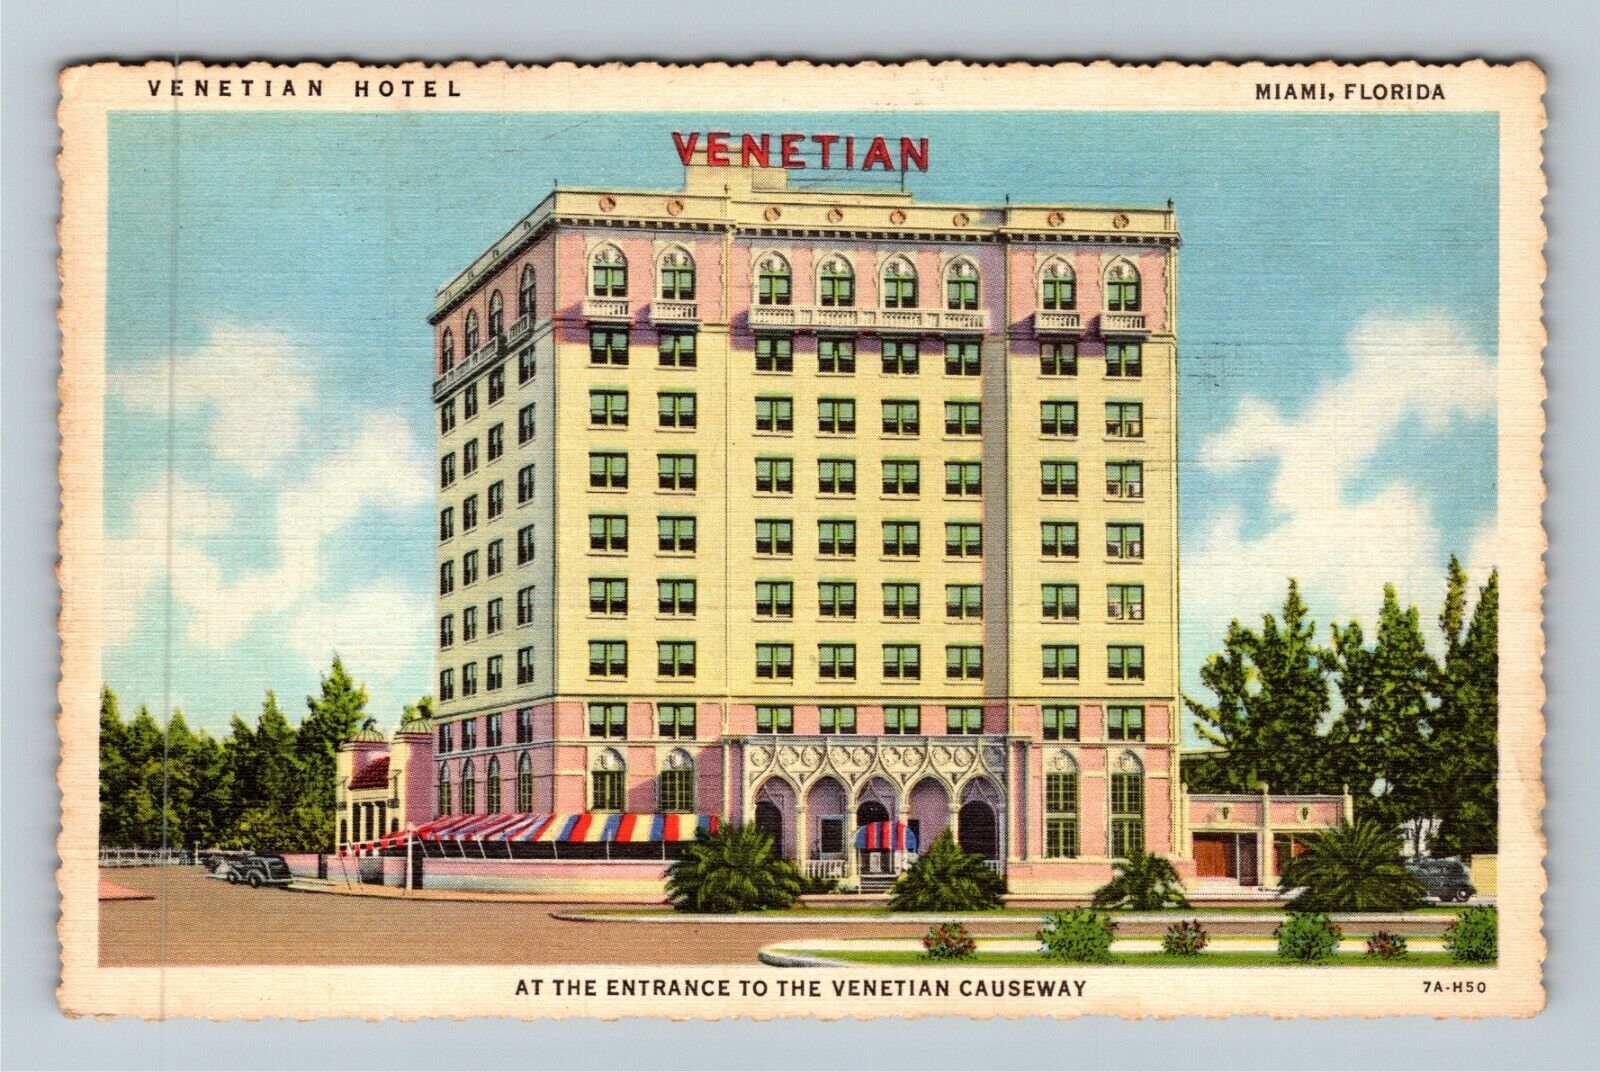 Miami, Florida, VENETIAN HOTEL, Advertising, c1937 Vintage Postcard